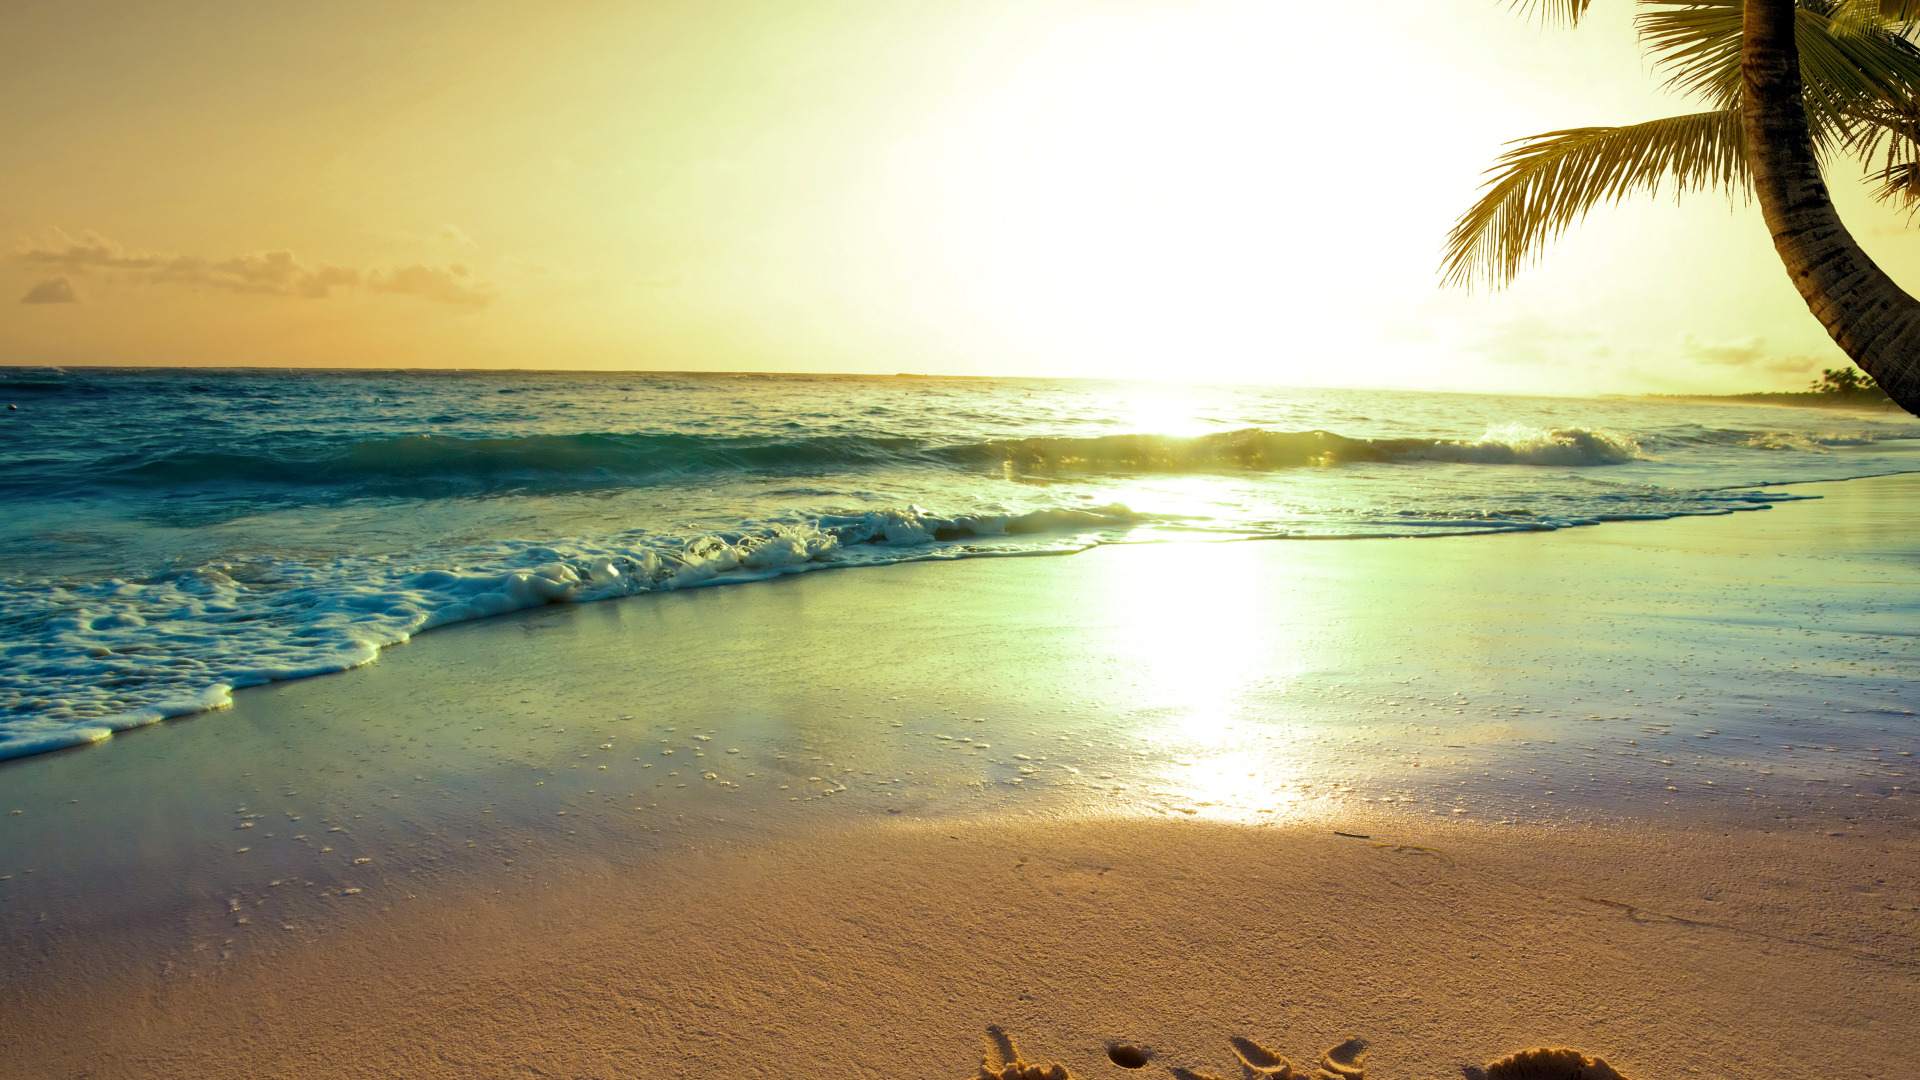 Море солнце пляж. Солнце пляж. Лето море солнце пляж. Красивое море. День на берегу океана